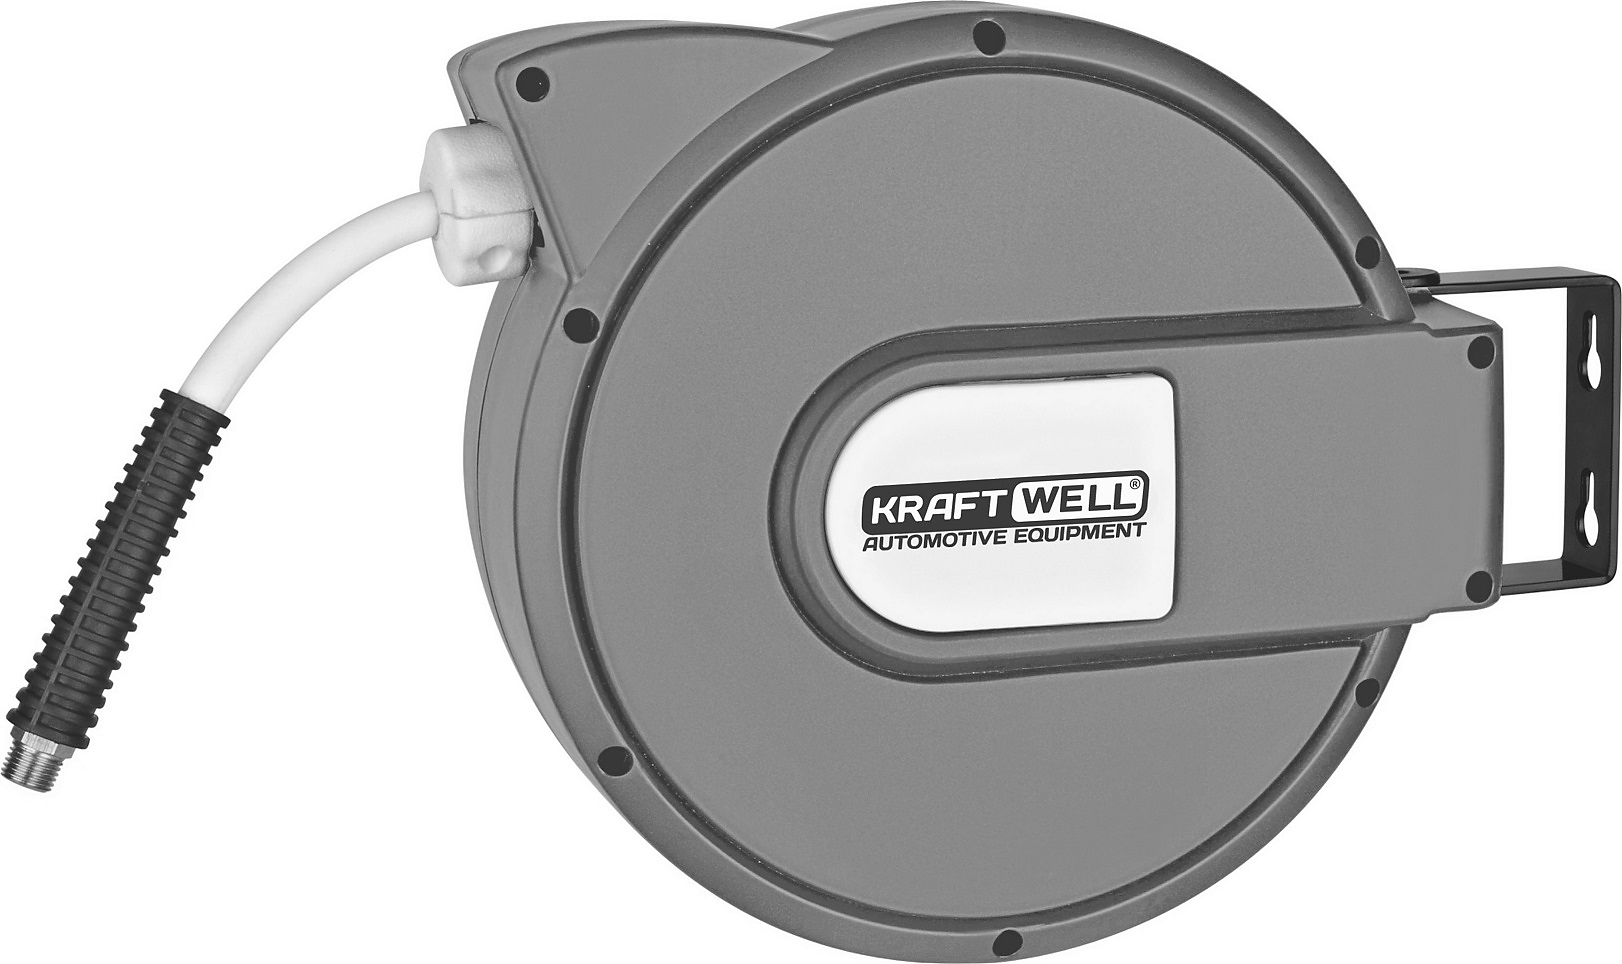 KRW1731.C5 Катушка для раздачи воздуха/воды, закрытая пластиковая KraftWell